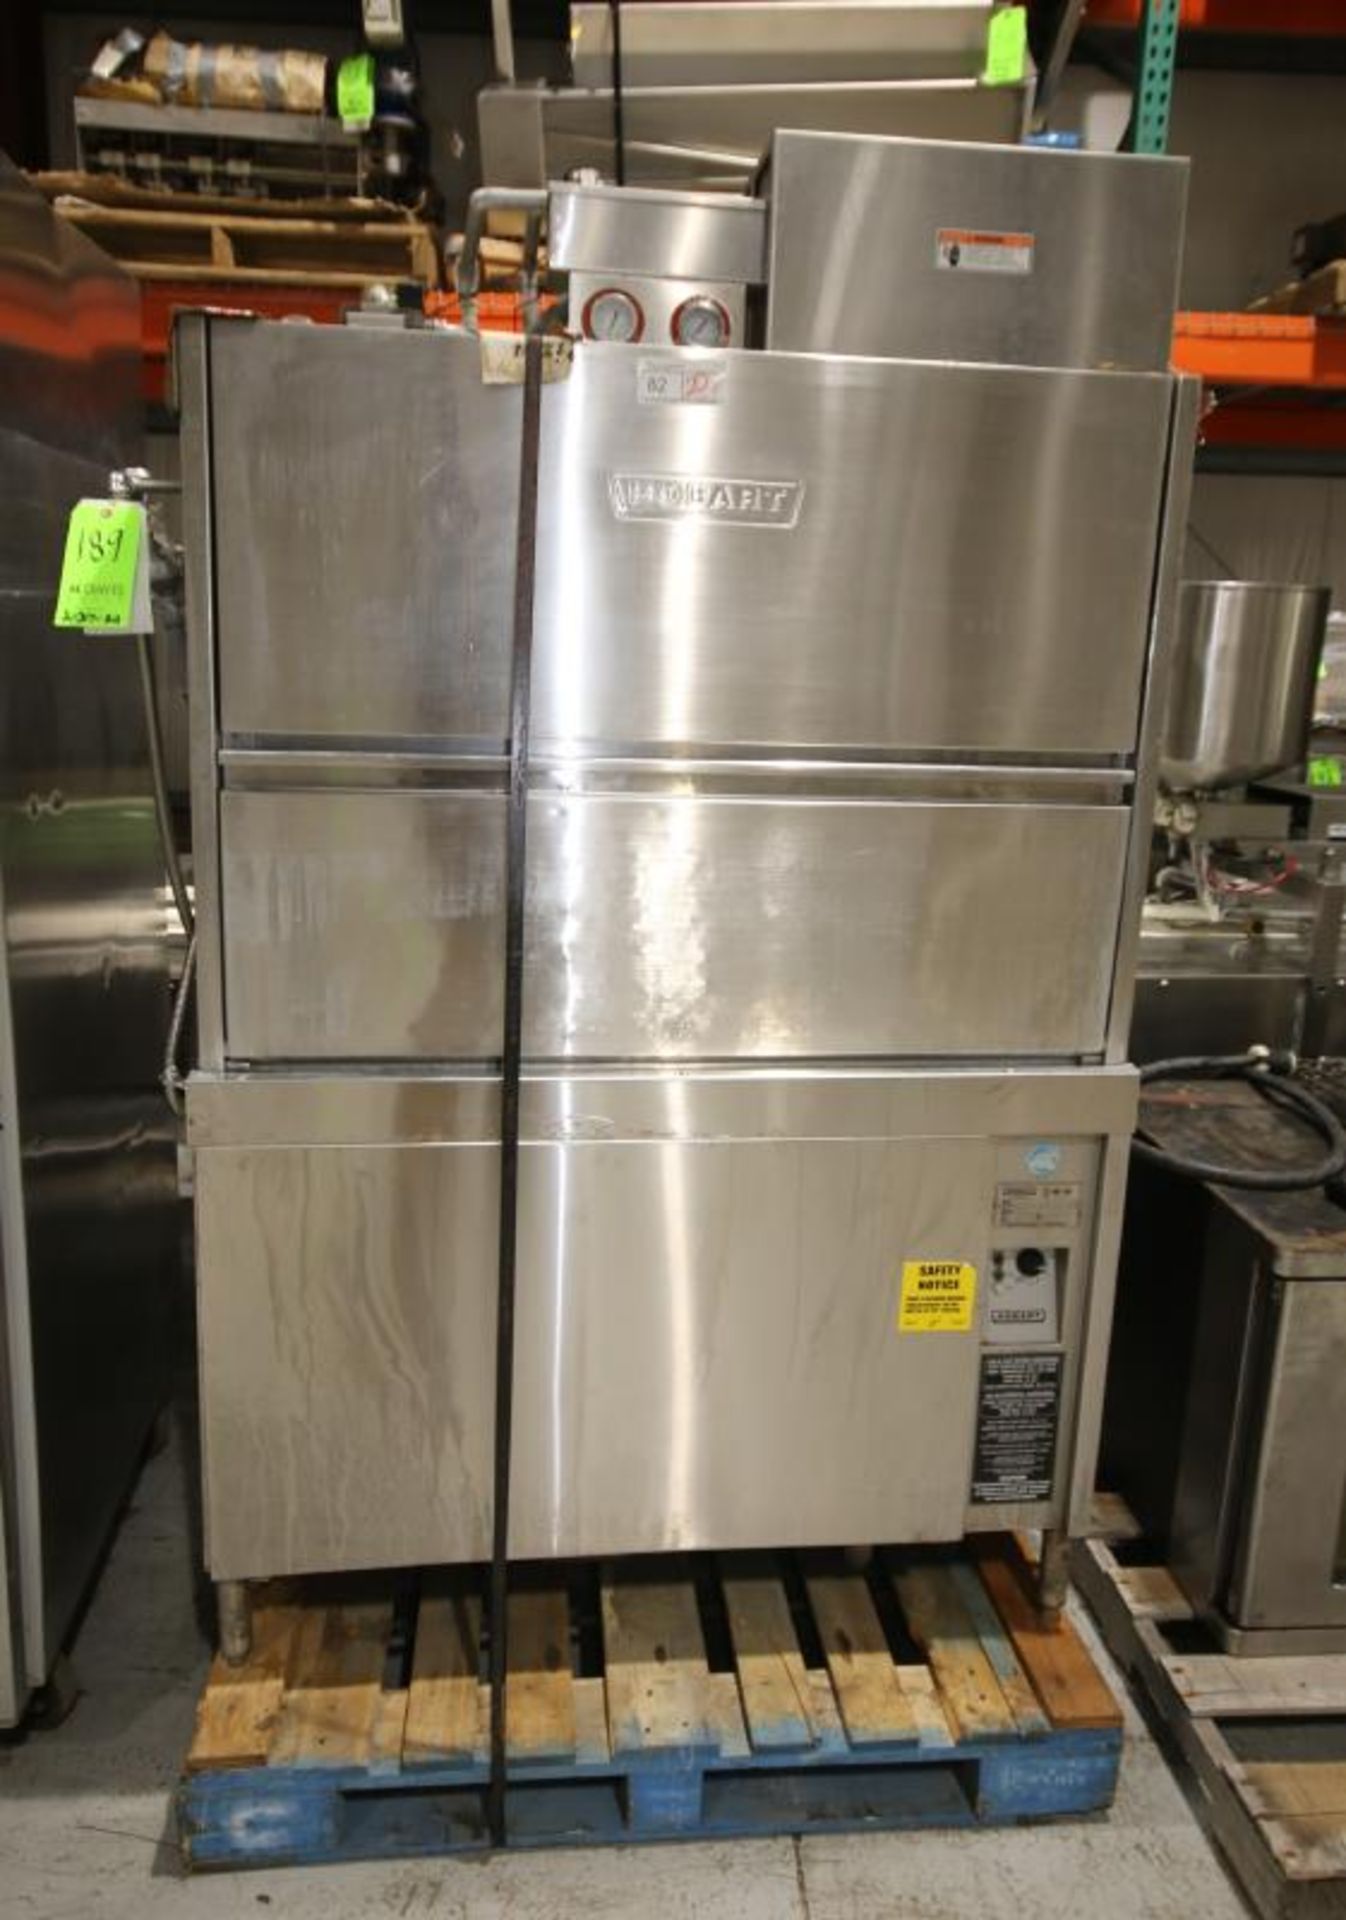 Hobart S/S Commercial Dish Washer, Model UW50, SN 85 - 1003451,